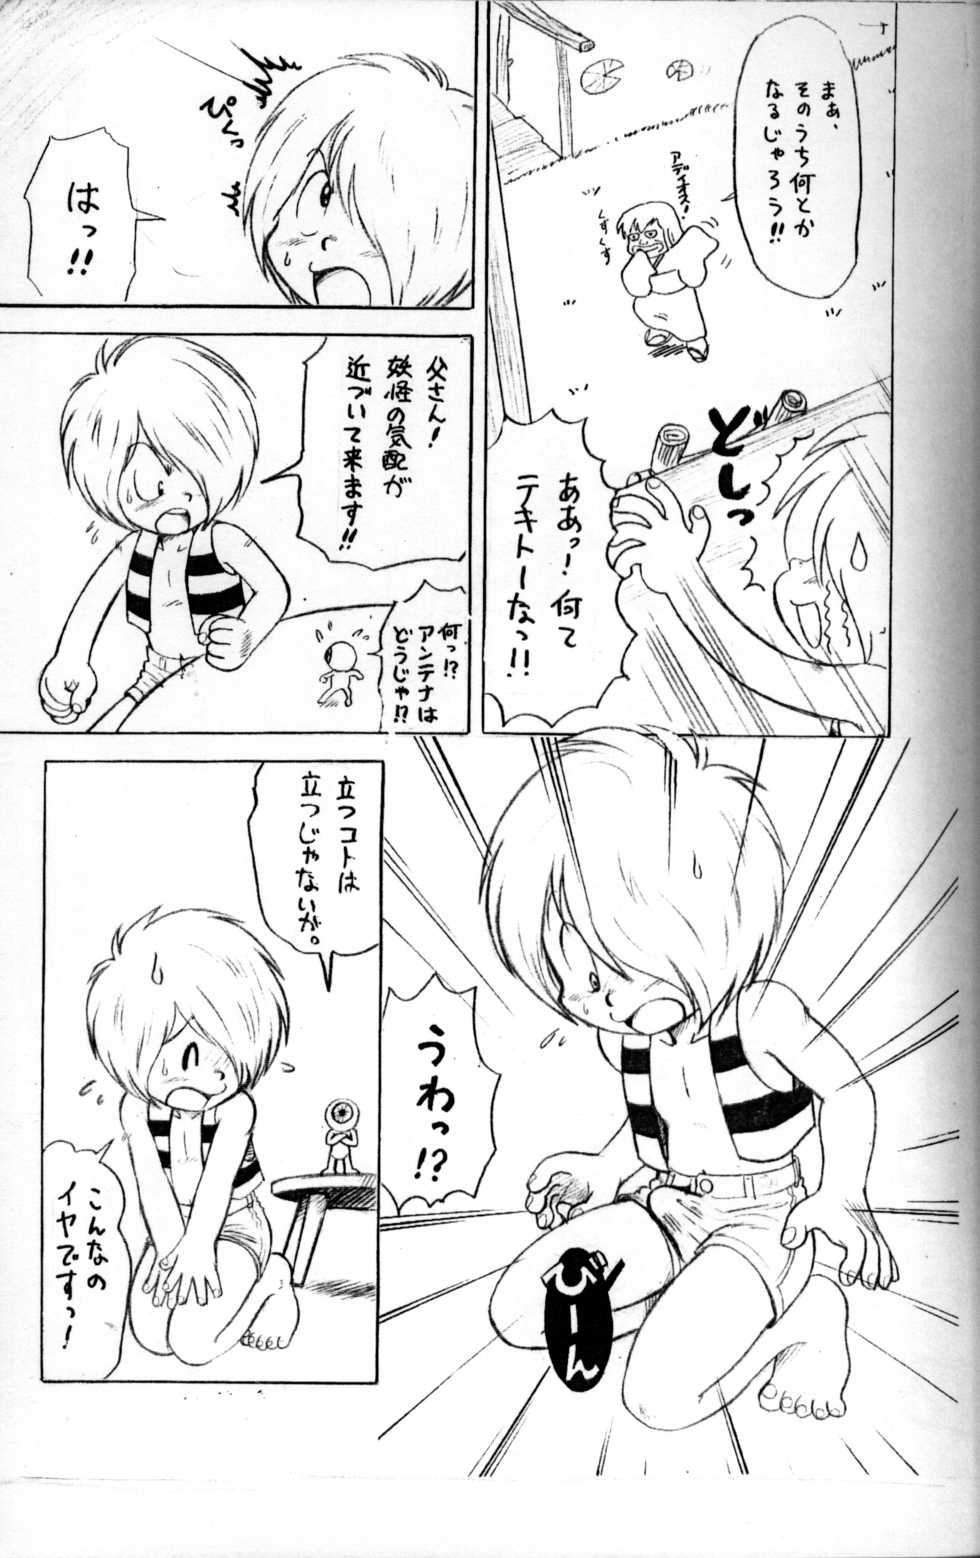 Mitsui Jun - Precious - Page 4